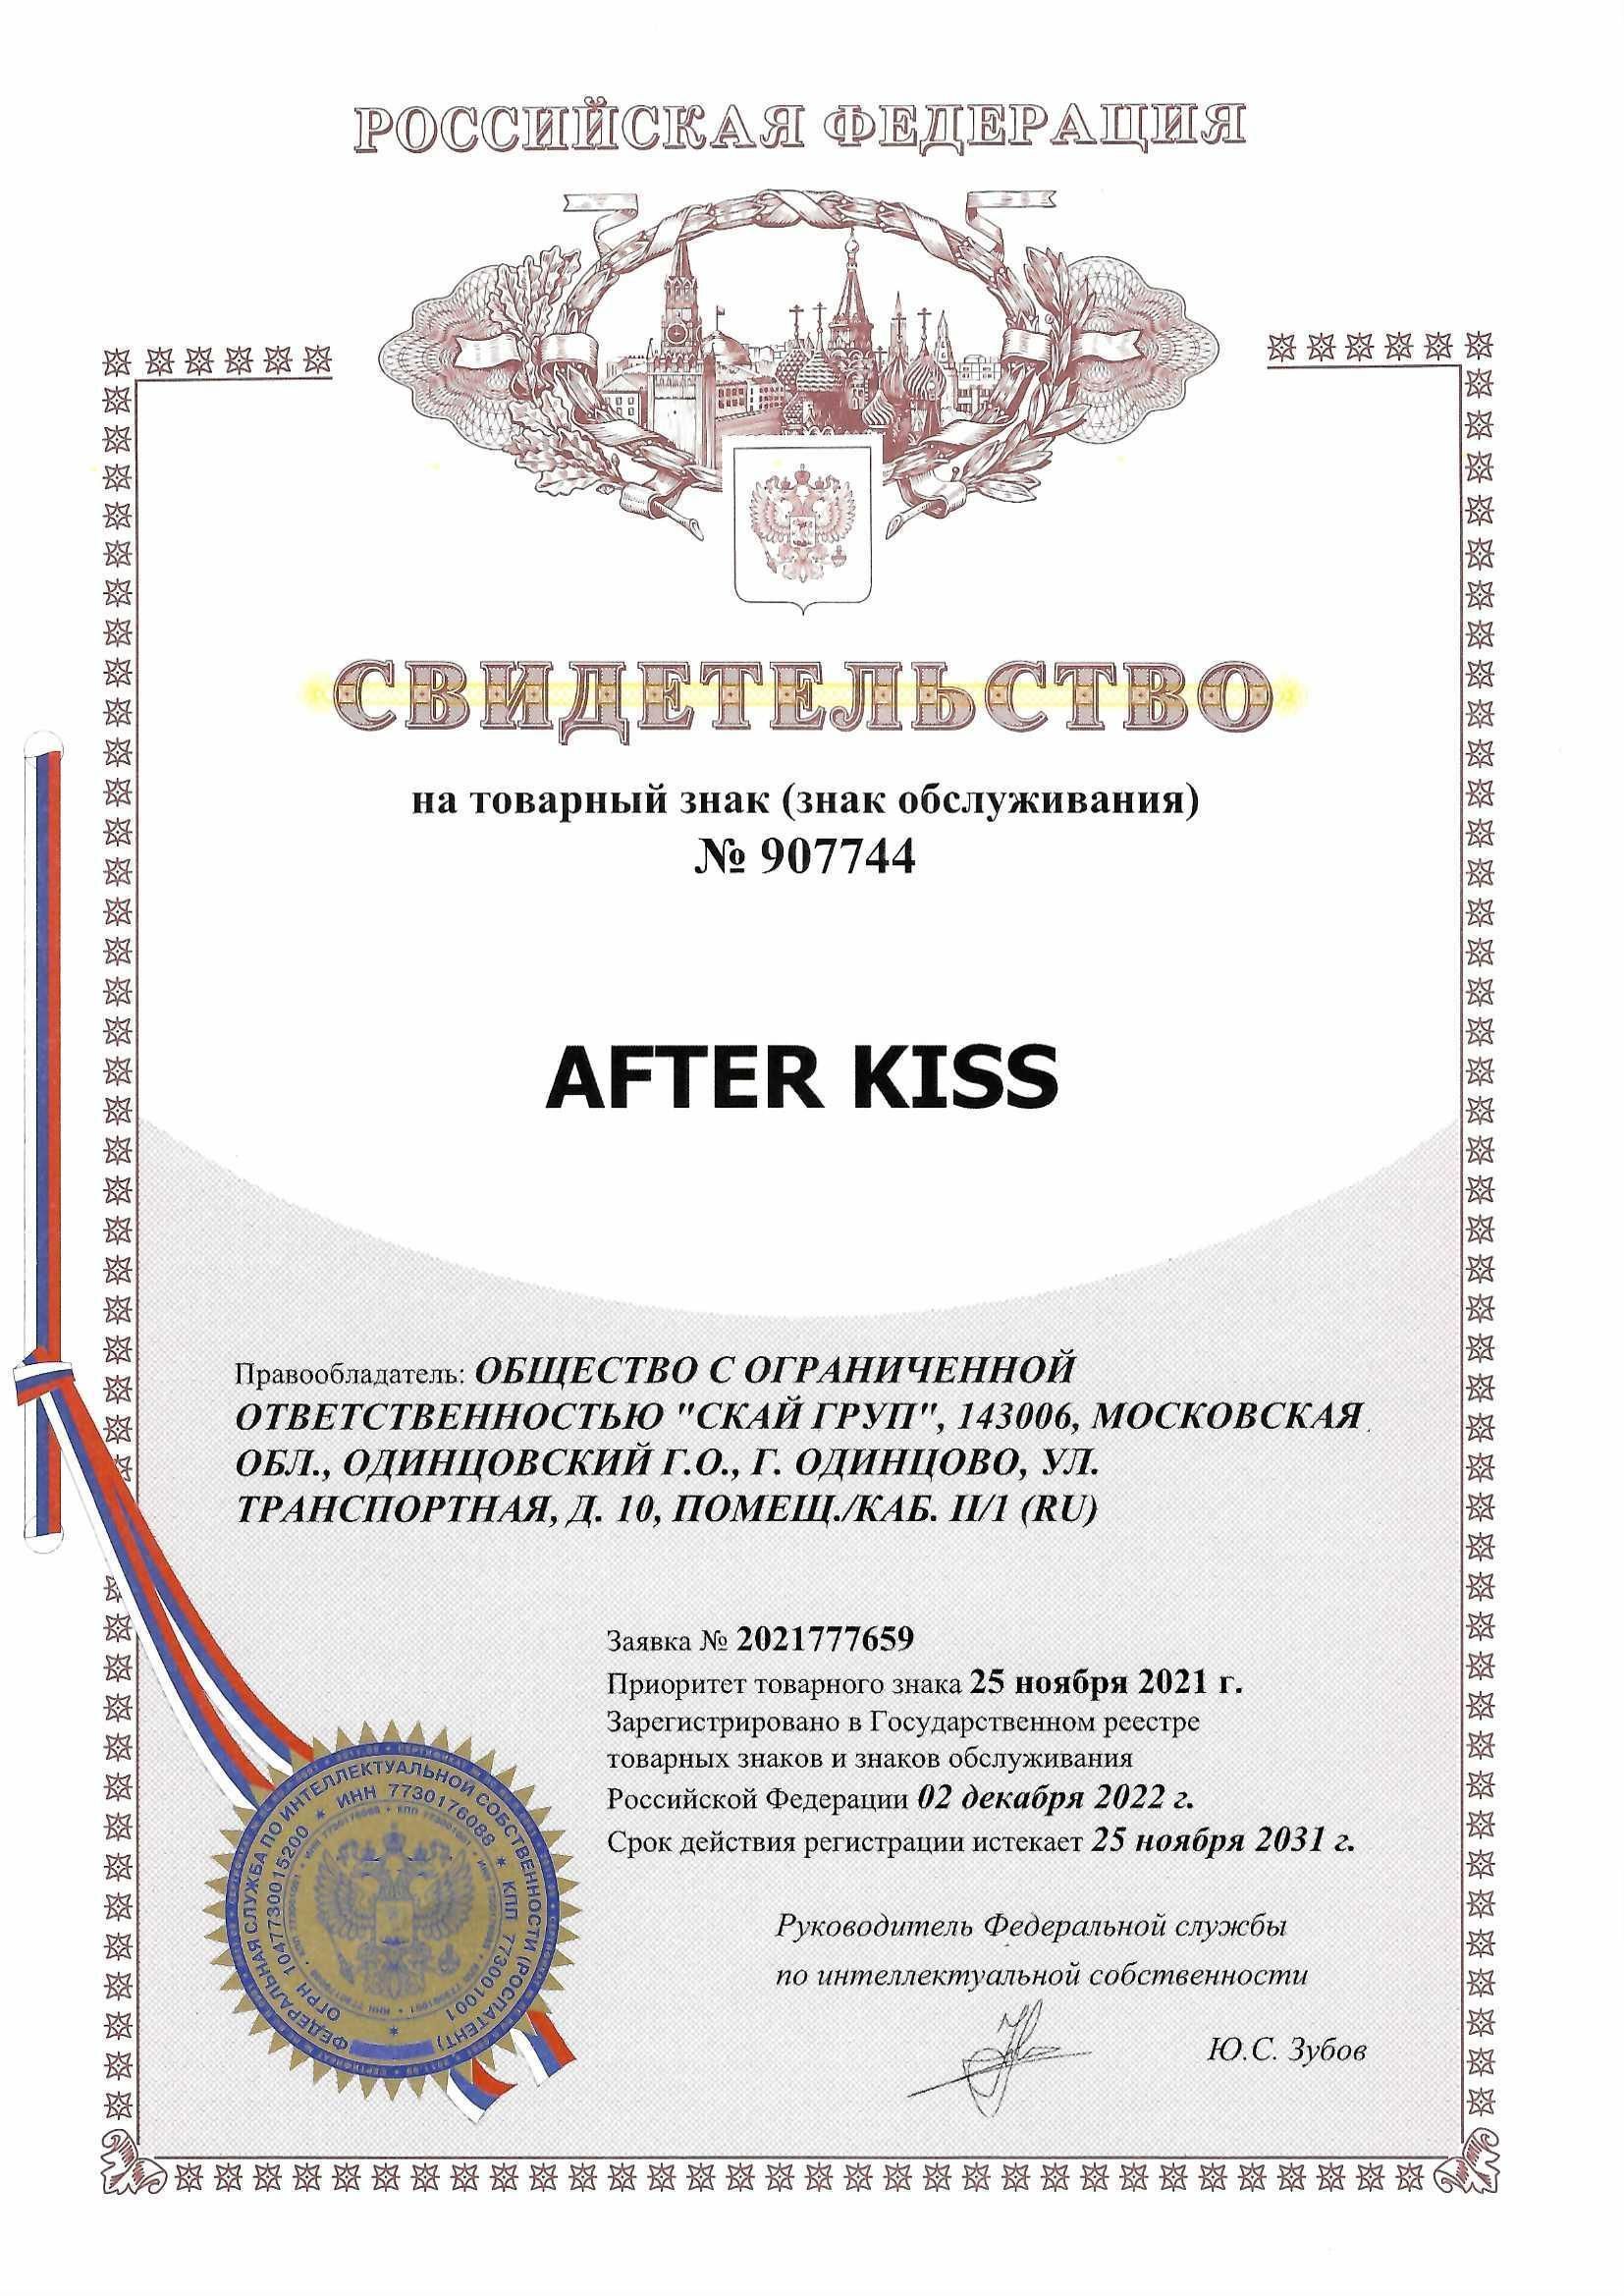 Товарный знак № 907744 – After Kiss